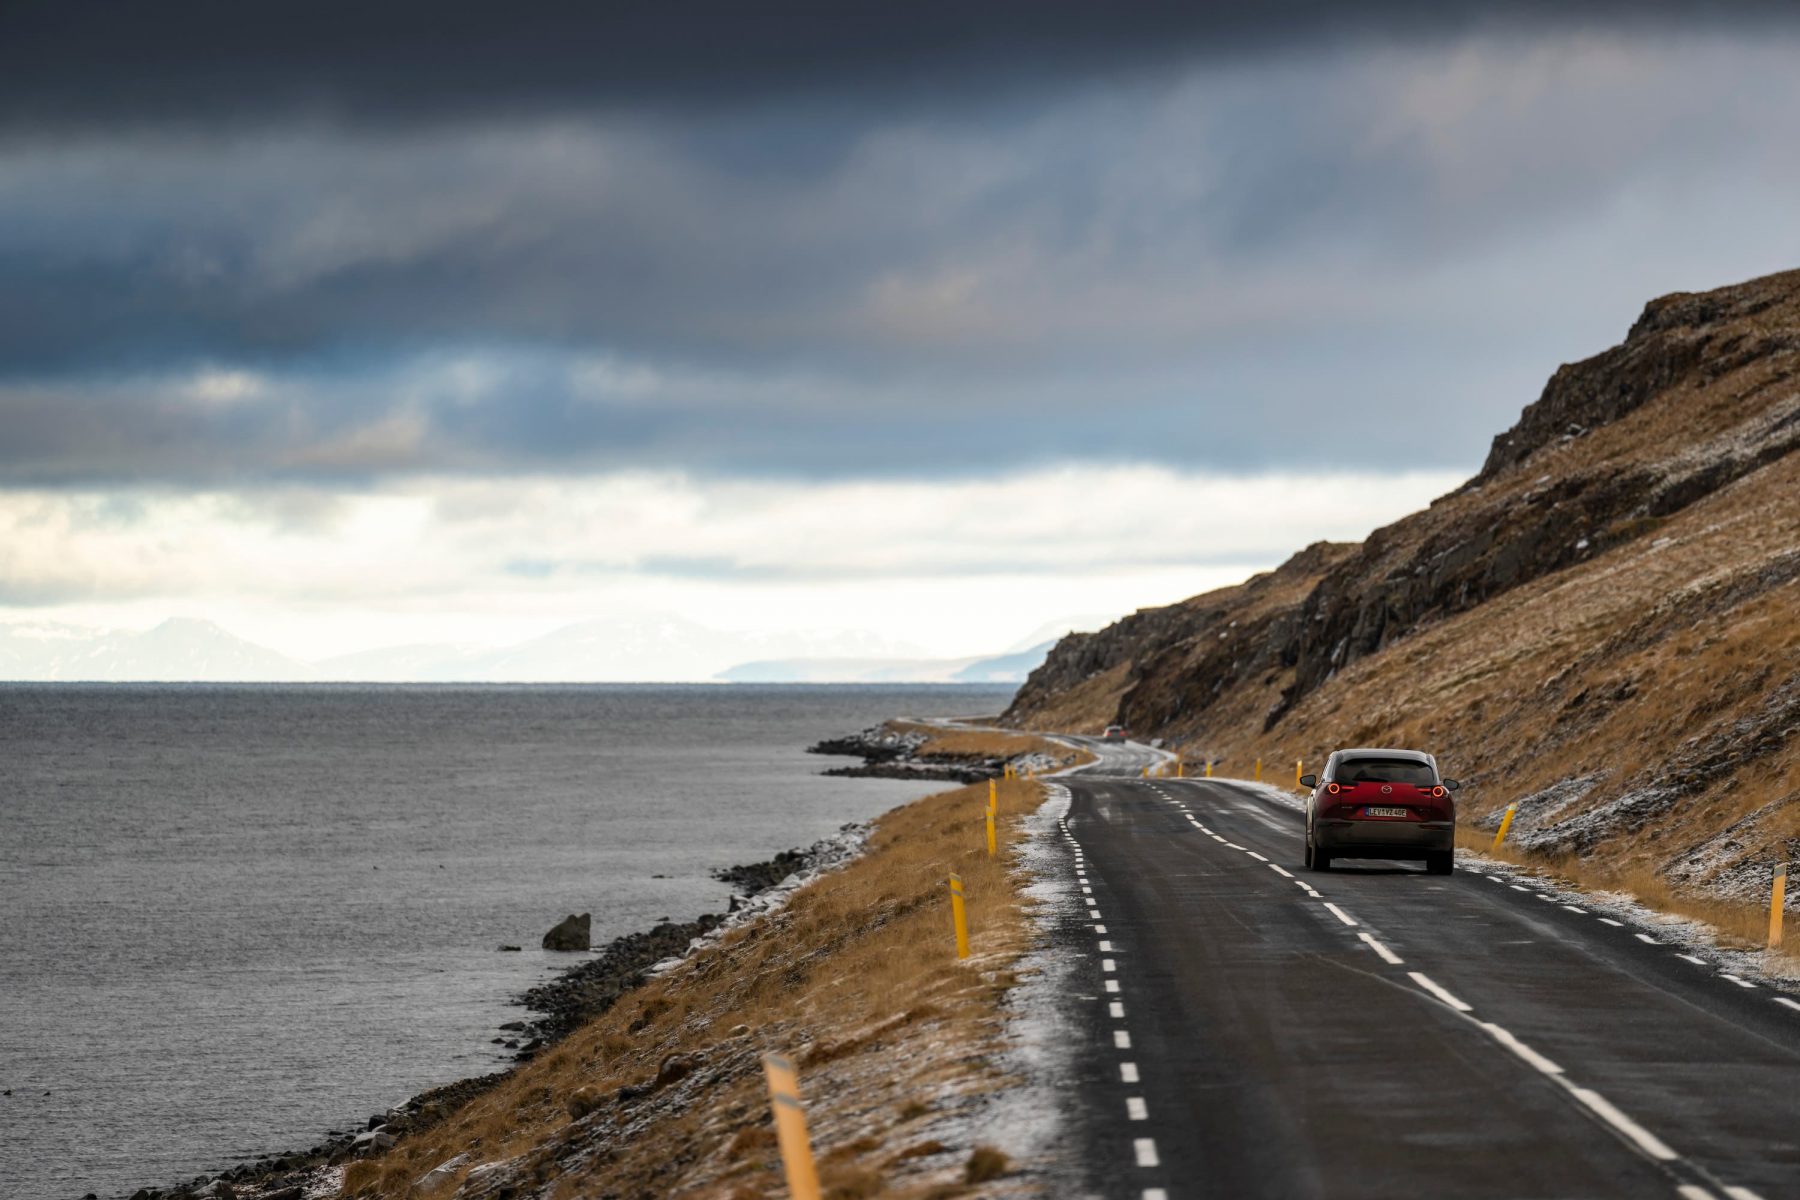 Mazda Iceland Adventure